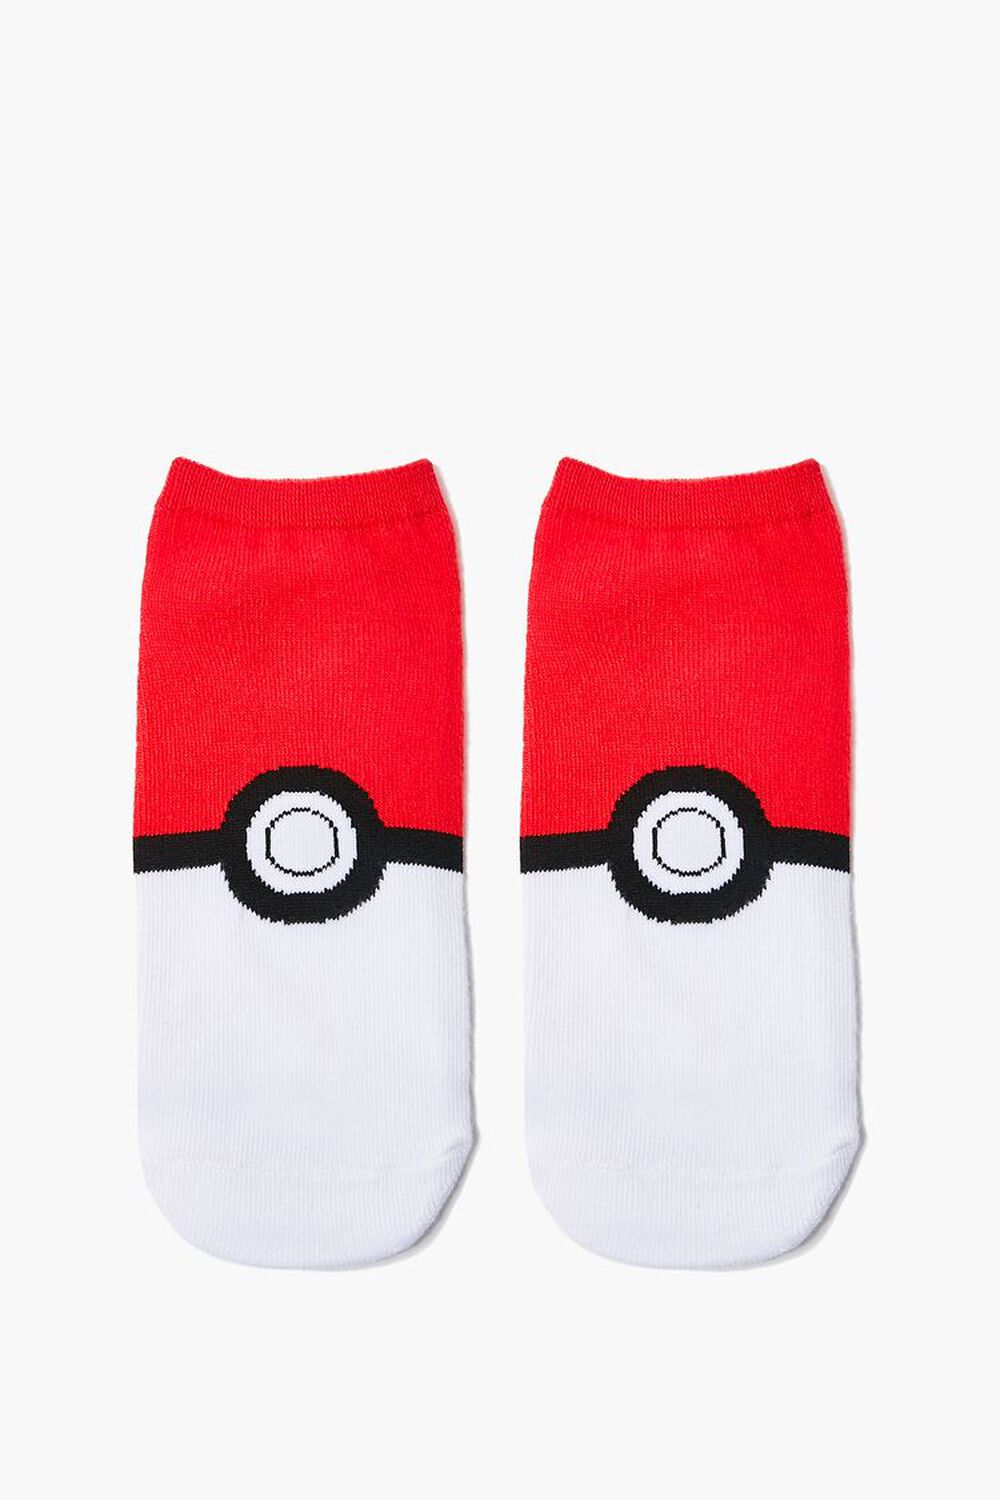 Pokémon Graphic Ankle Socks, image 2